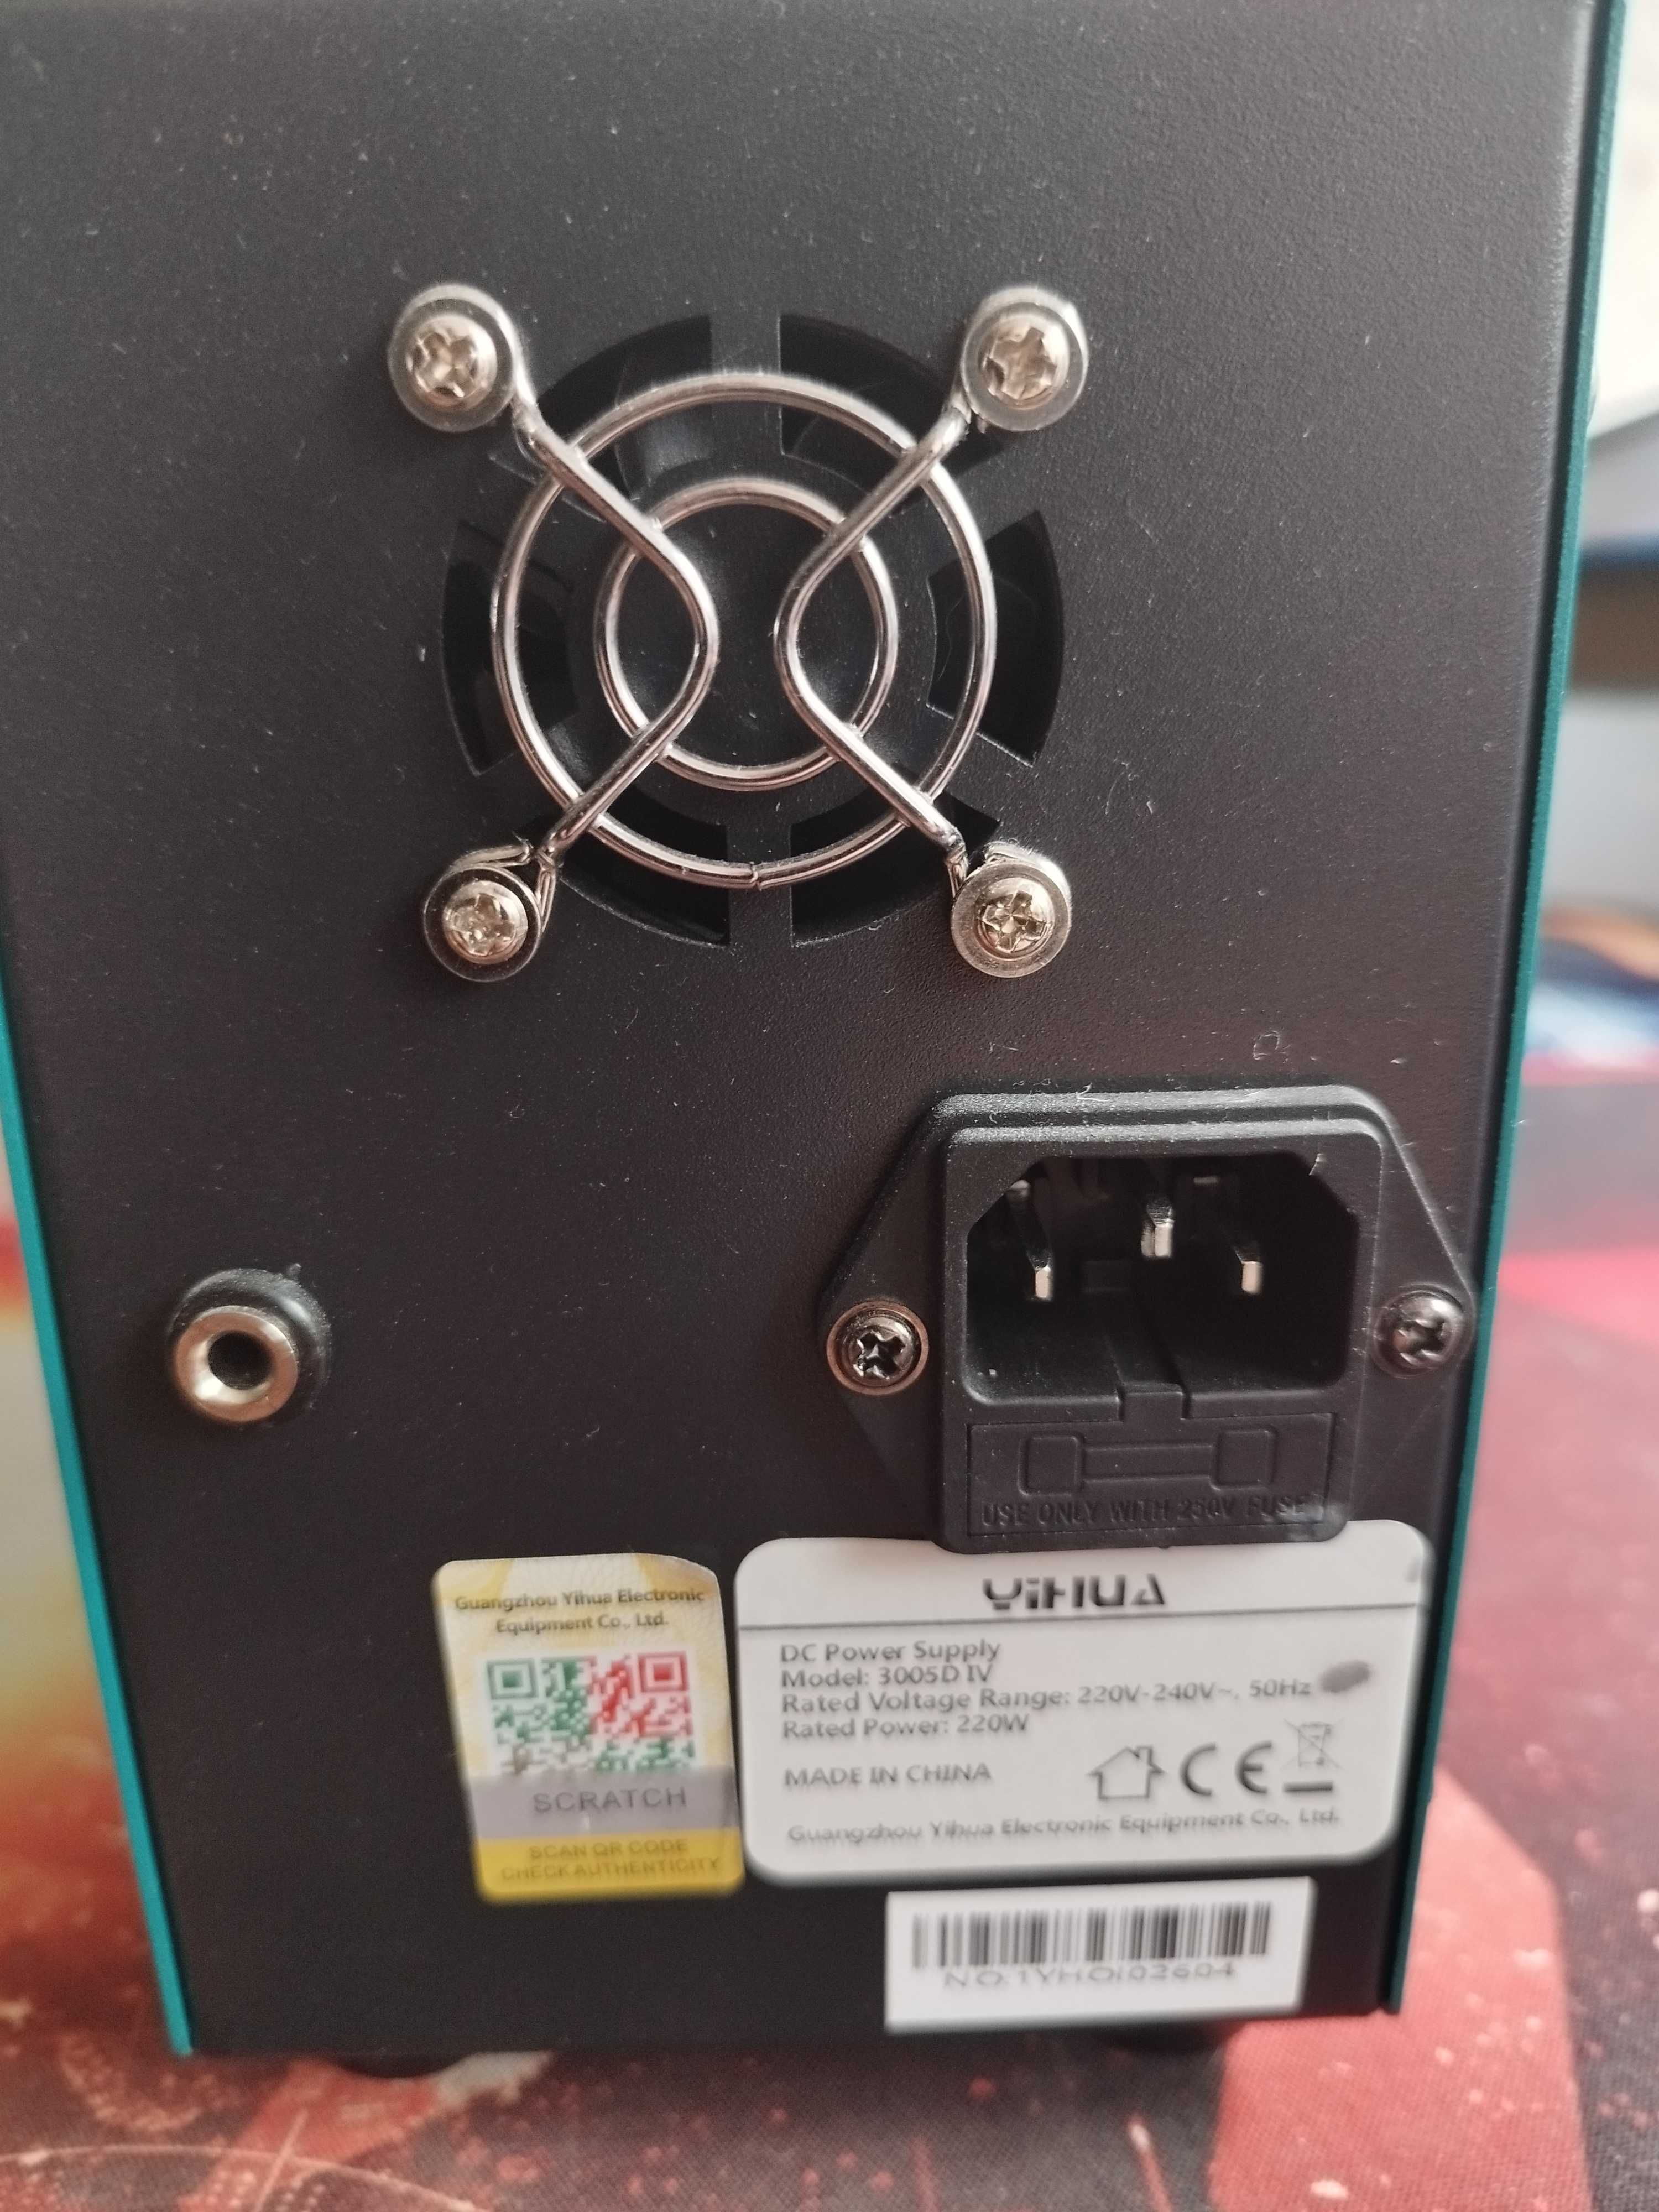 Zasilacz serwisowy - YIHUA 3005D IV + Kable iphone